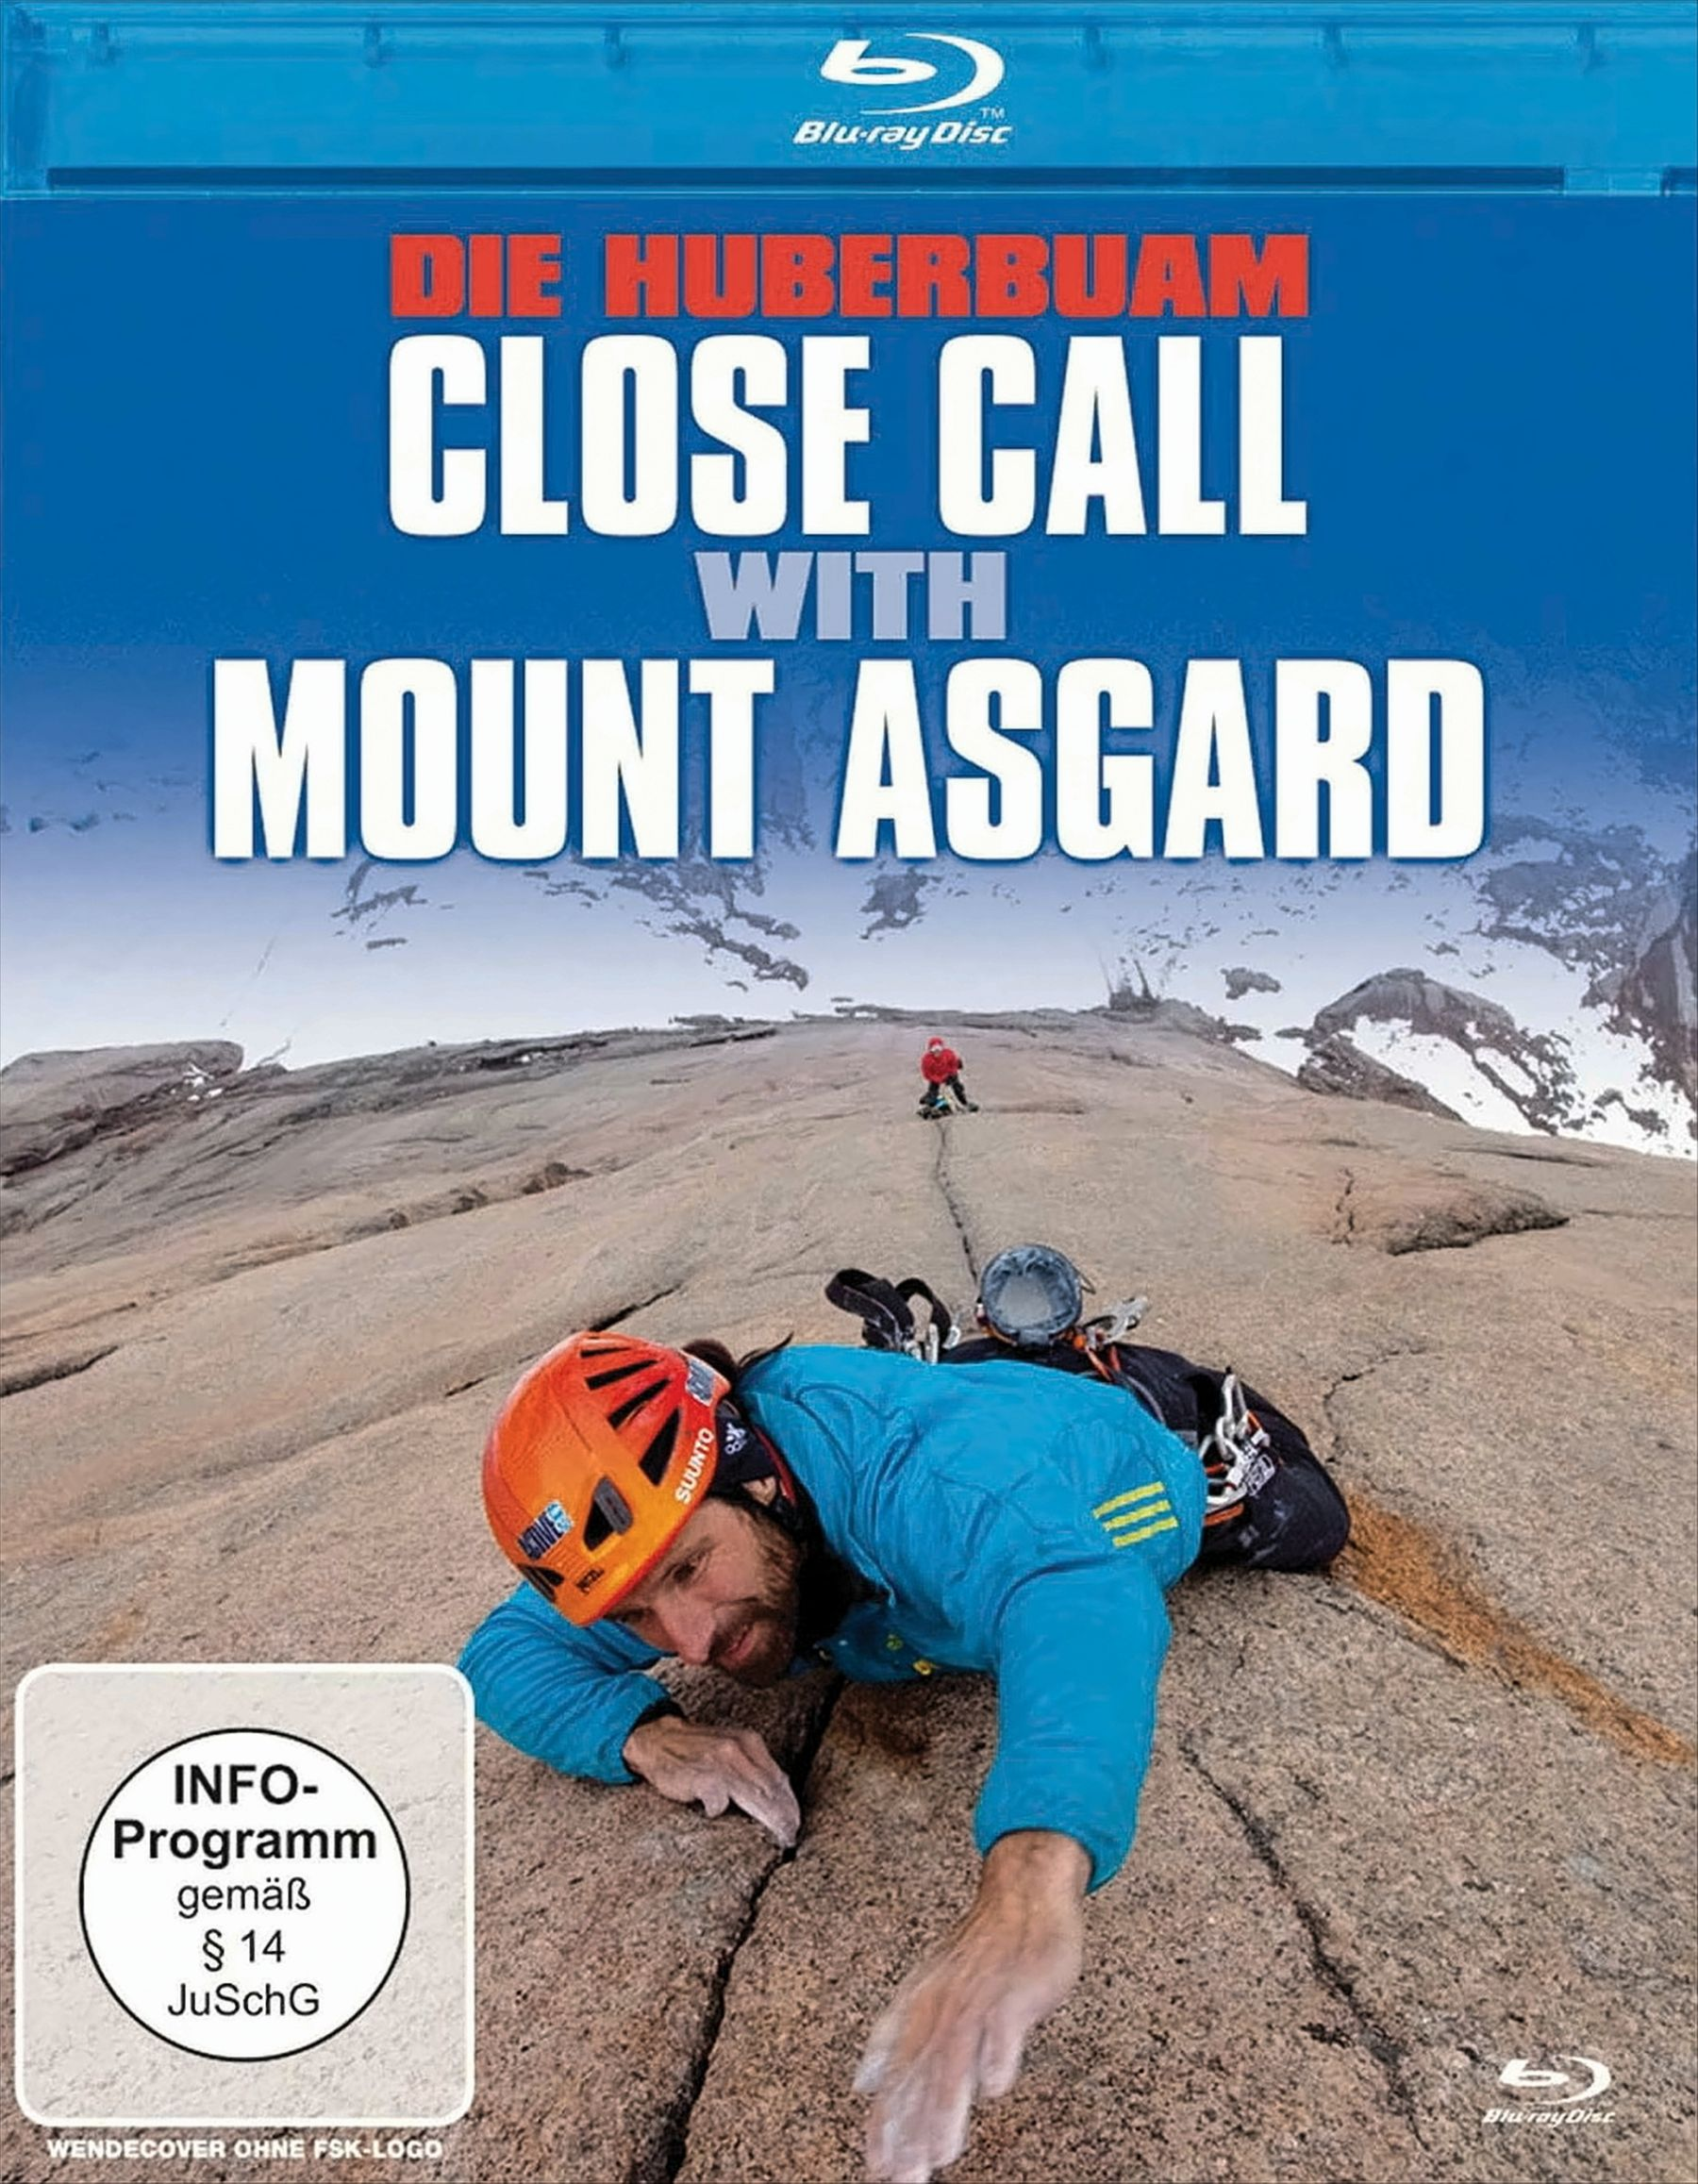 with Call - Asgard Die Blu-ray Huberbuam Mt. Close